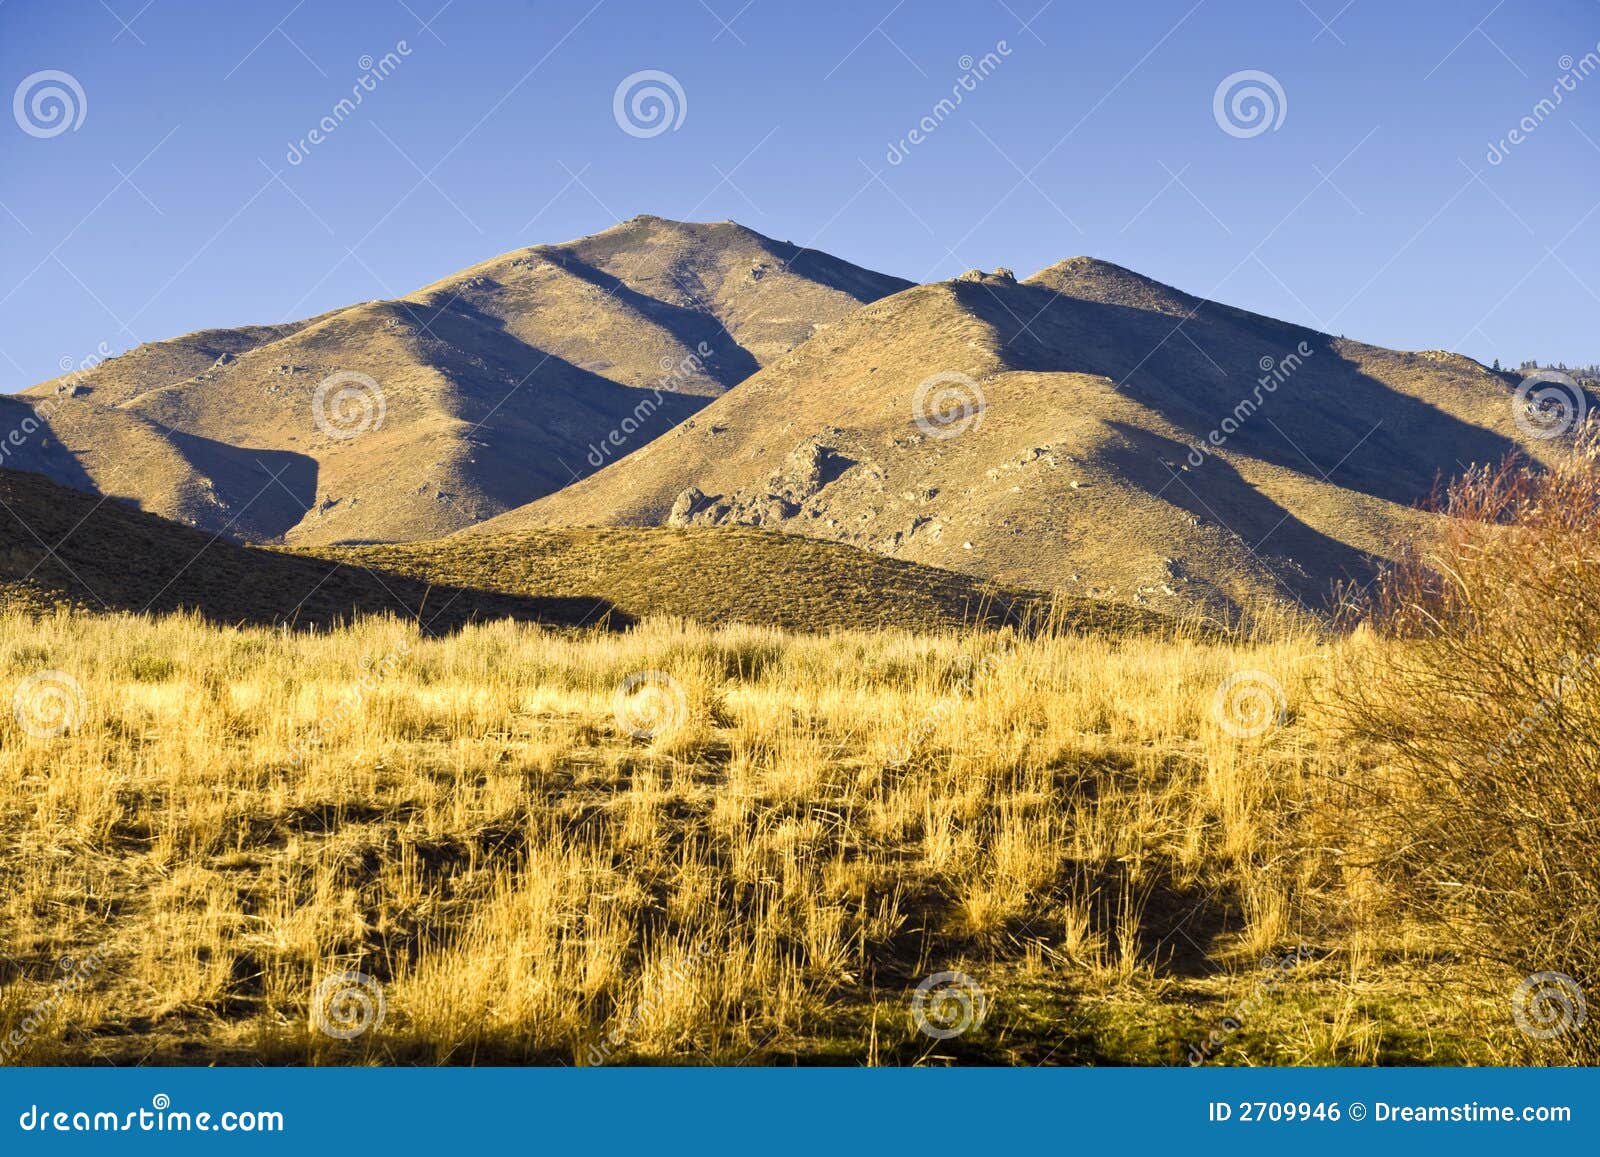 Idaho scenic desert mountains